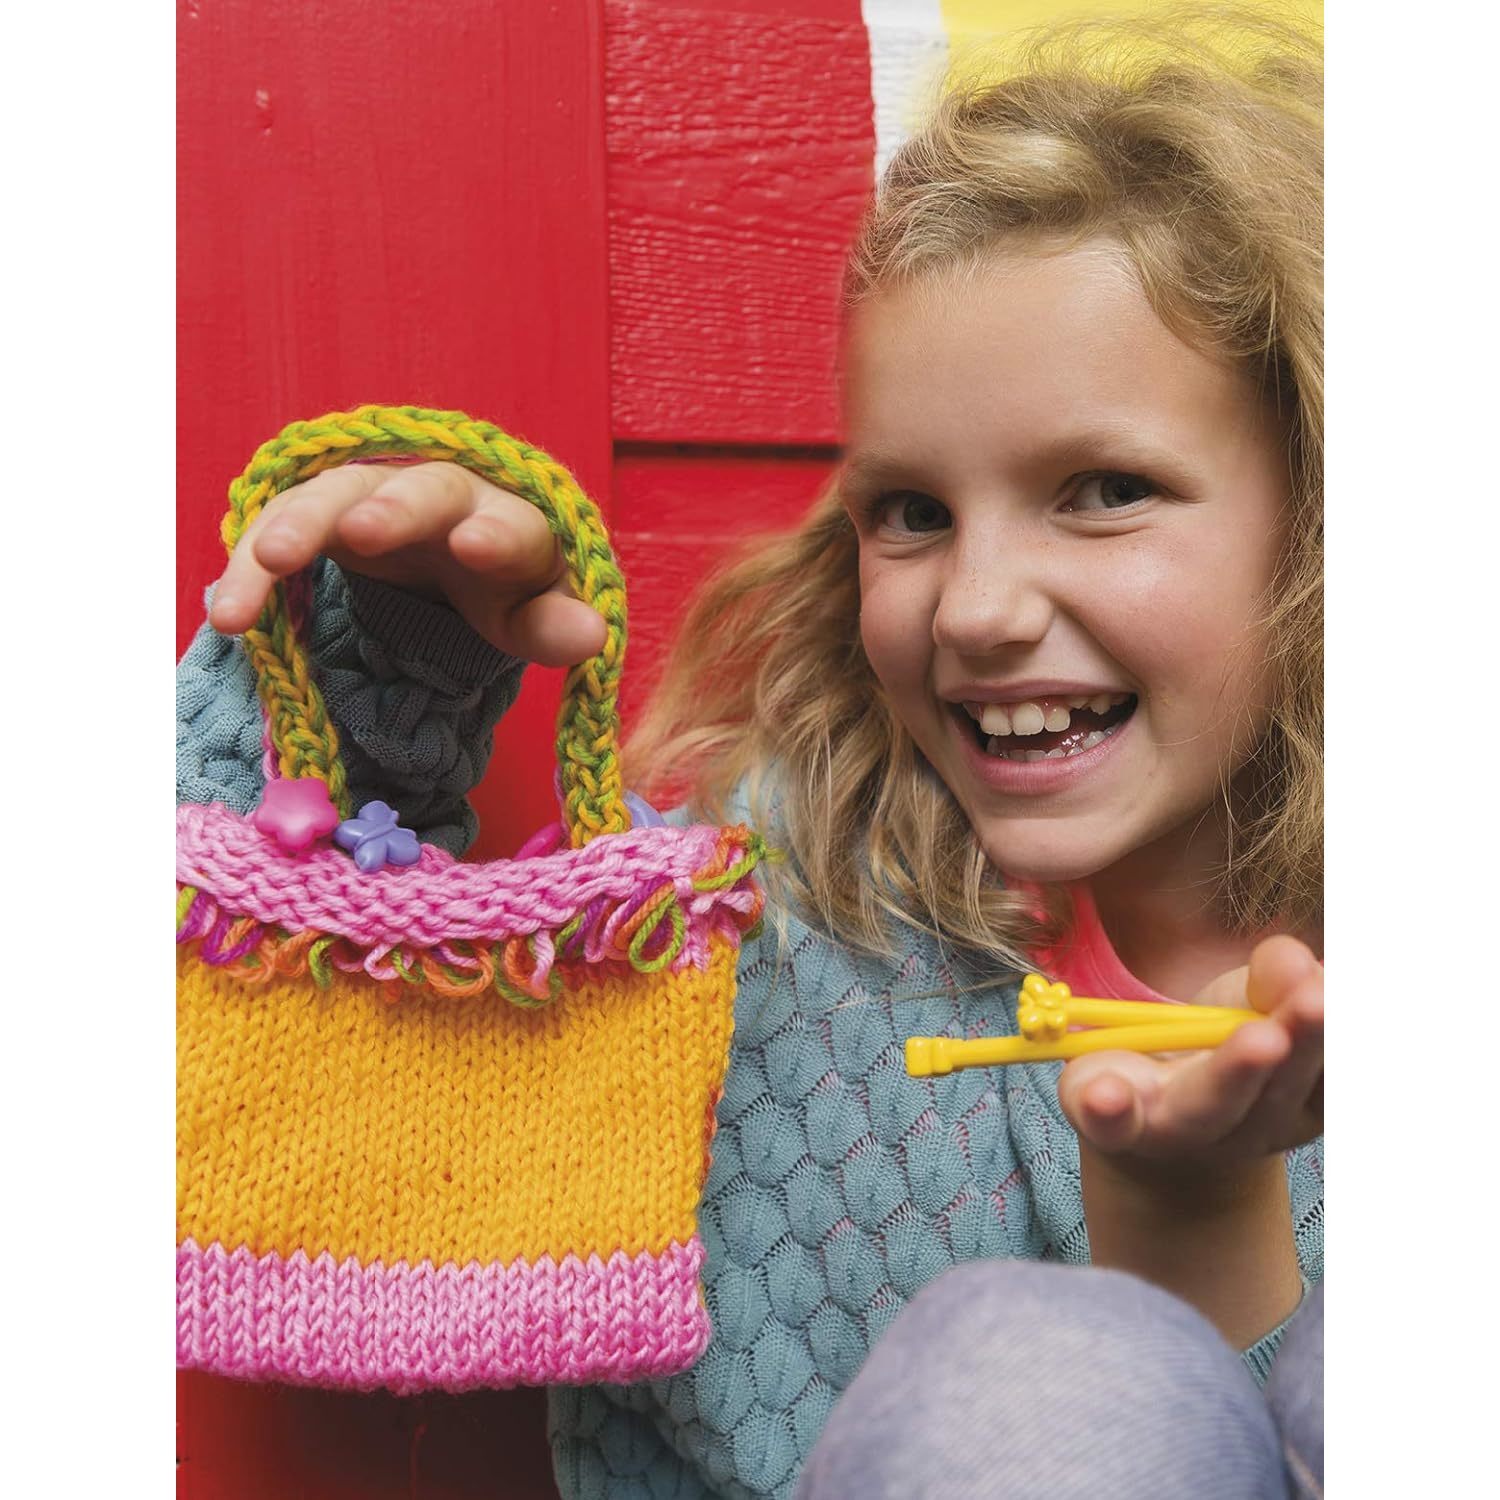 Toysmith® Easy To Do Knitting Kit